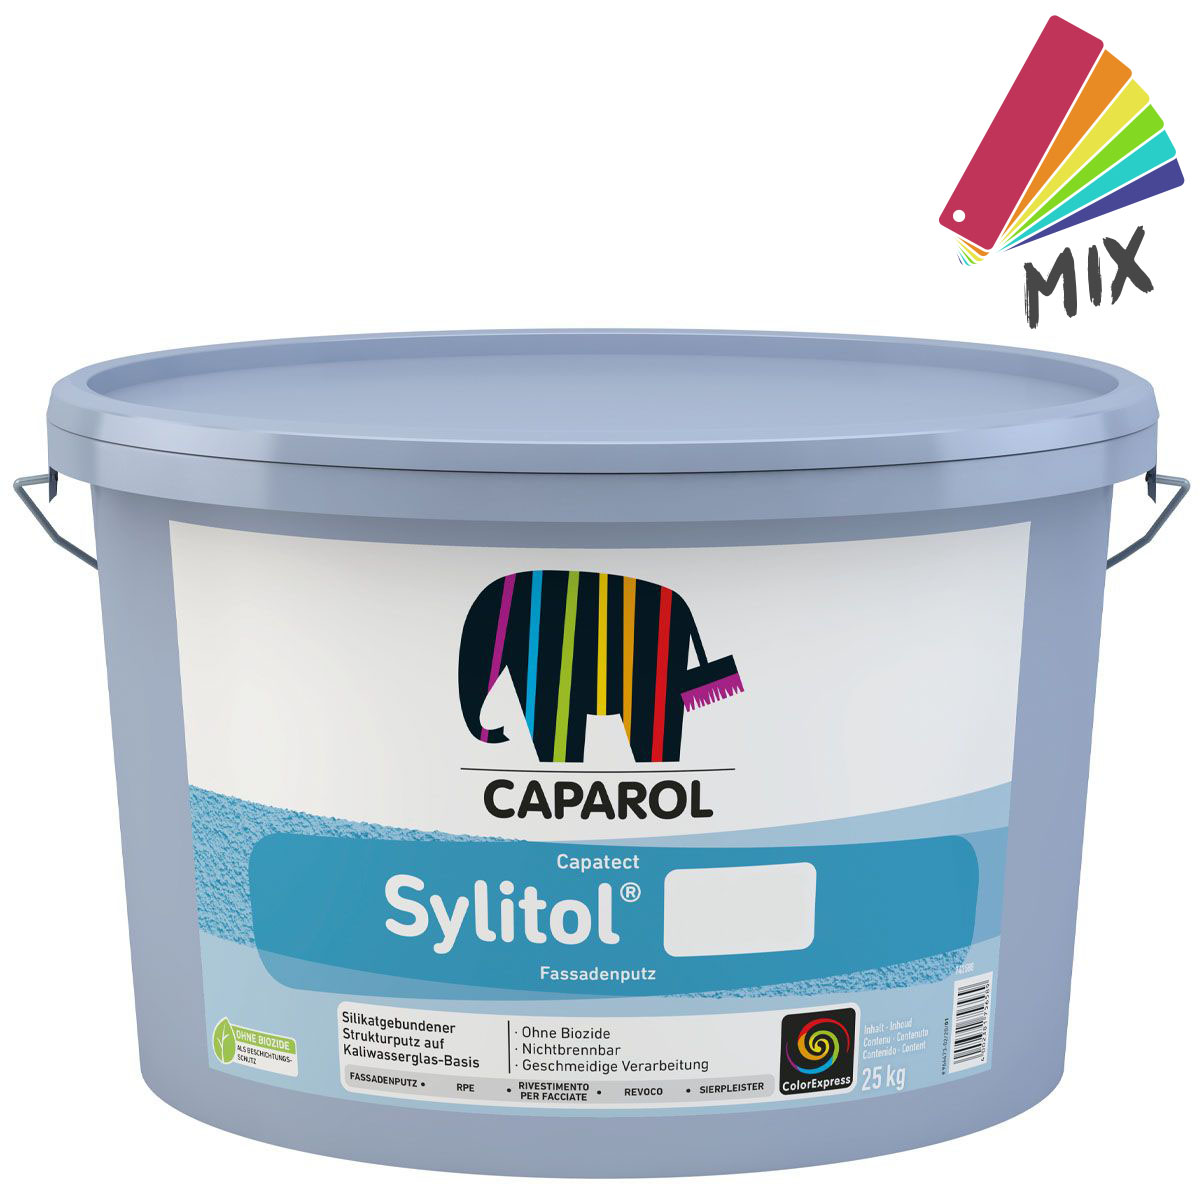 Caparol Capatect Sylitol Fassadenputz K30 (3mm) 25kg, MIX